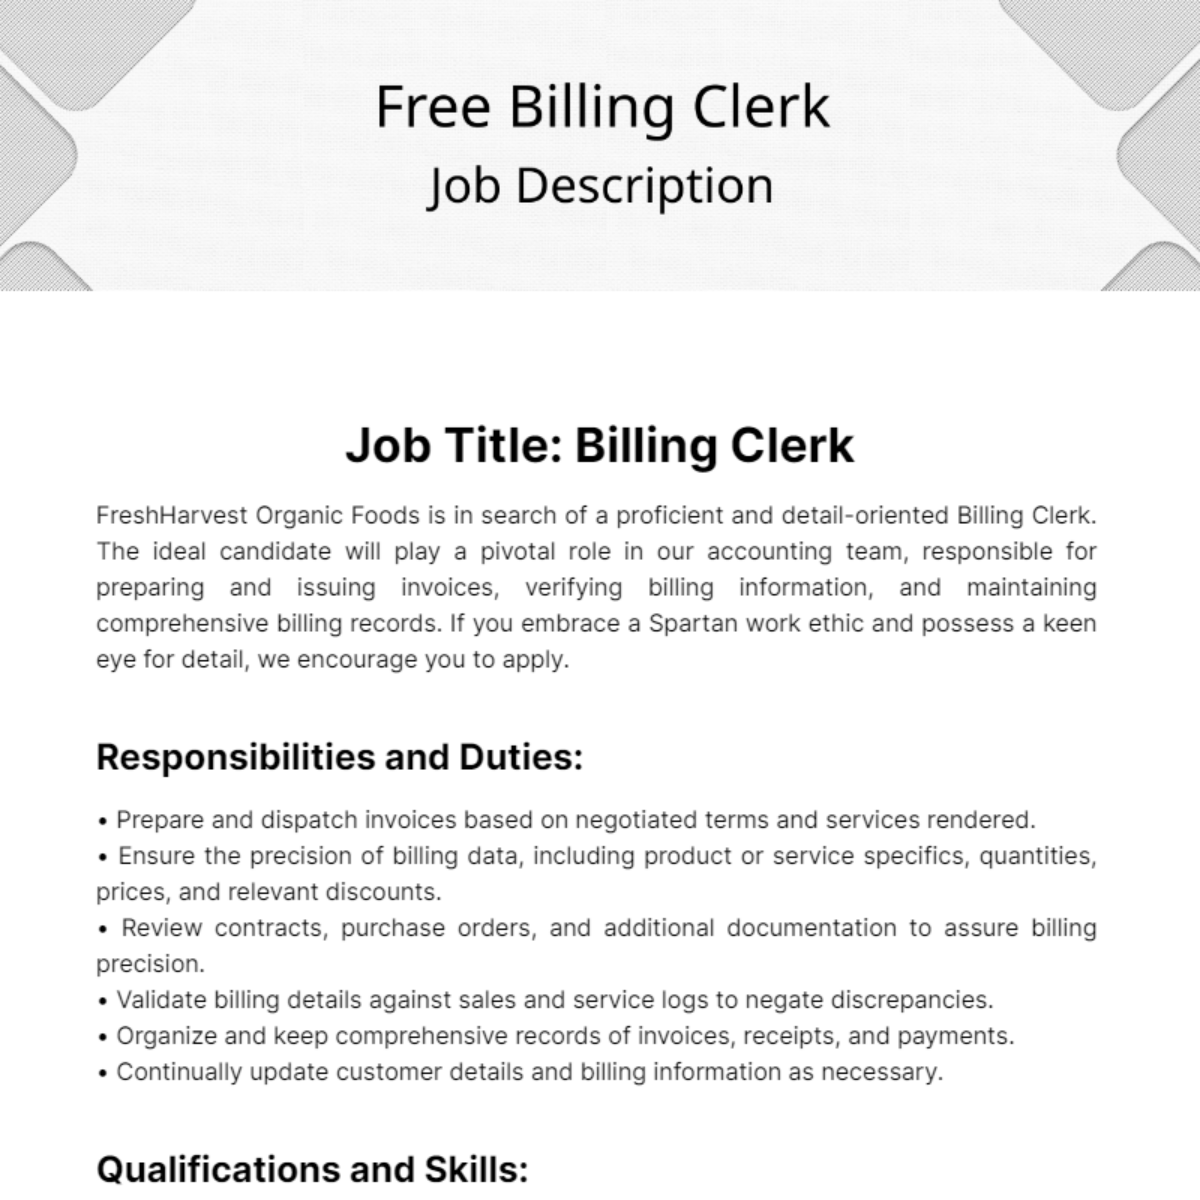 Free Billing Clerk Job Description Template